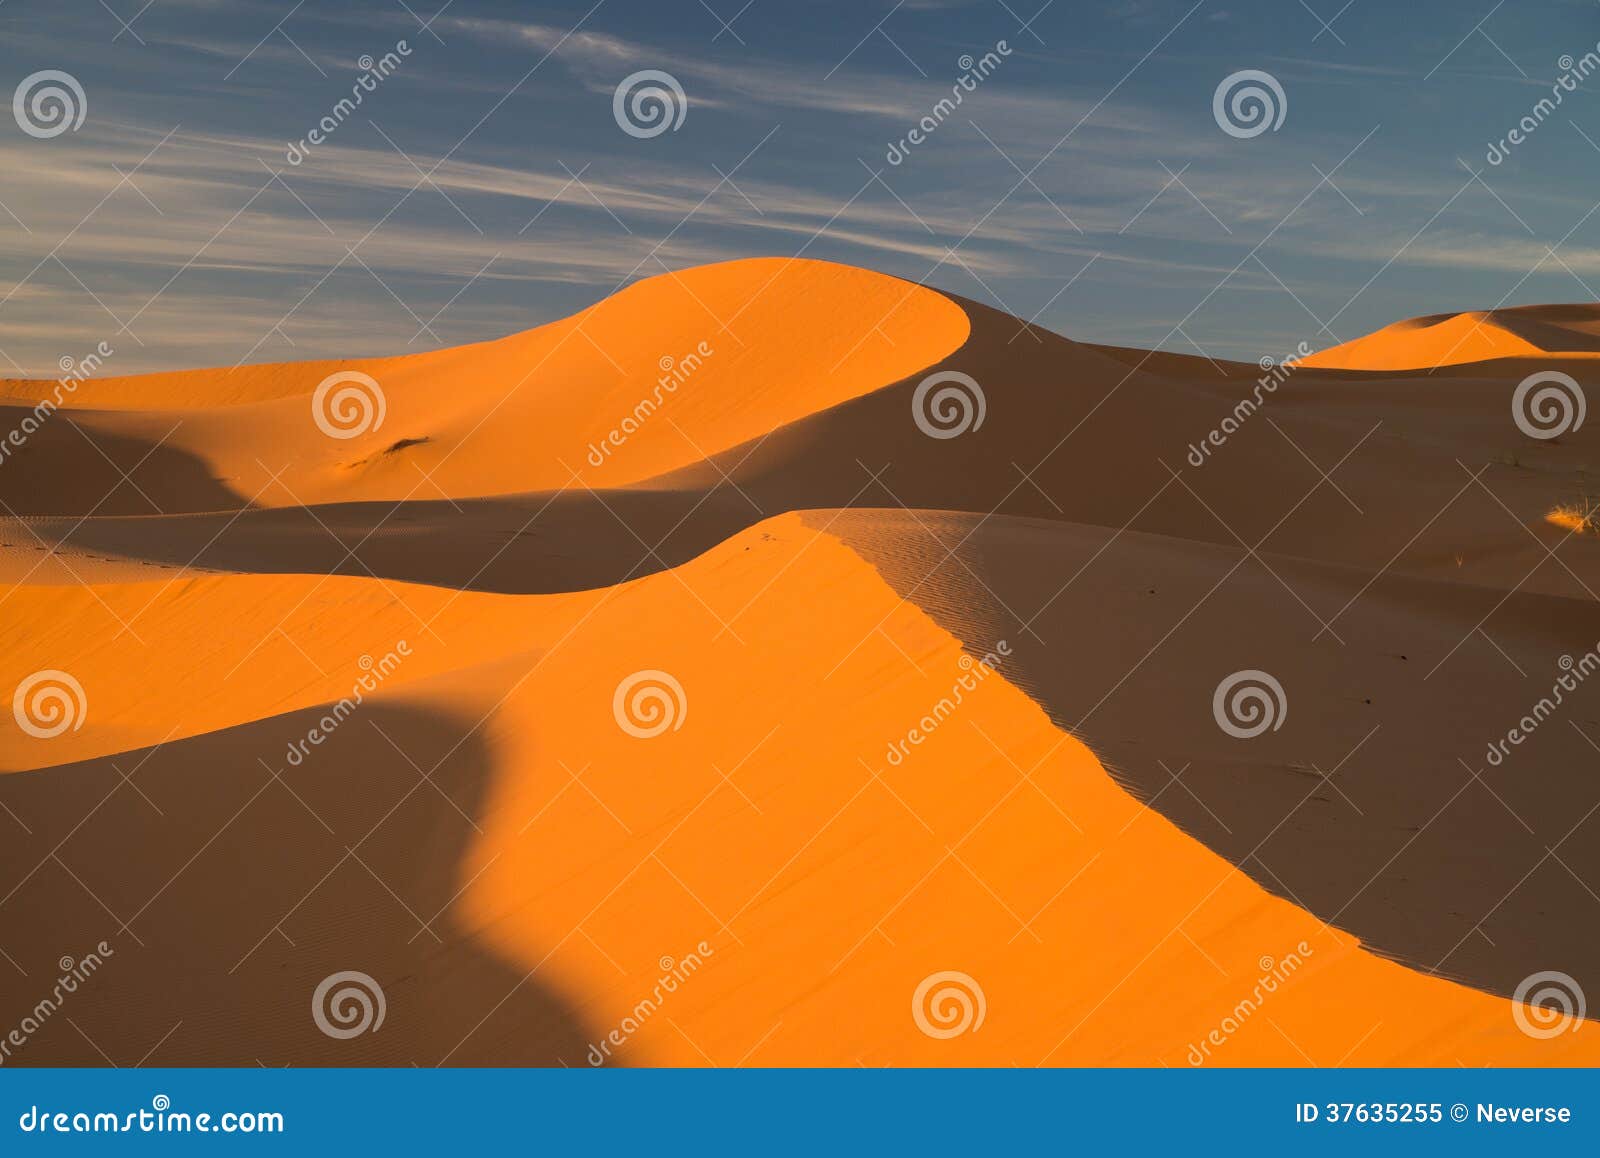 desert landscape in morroco